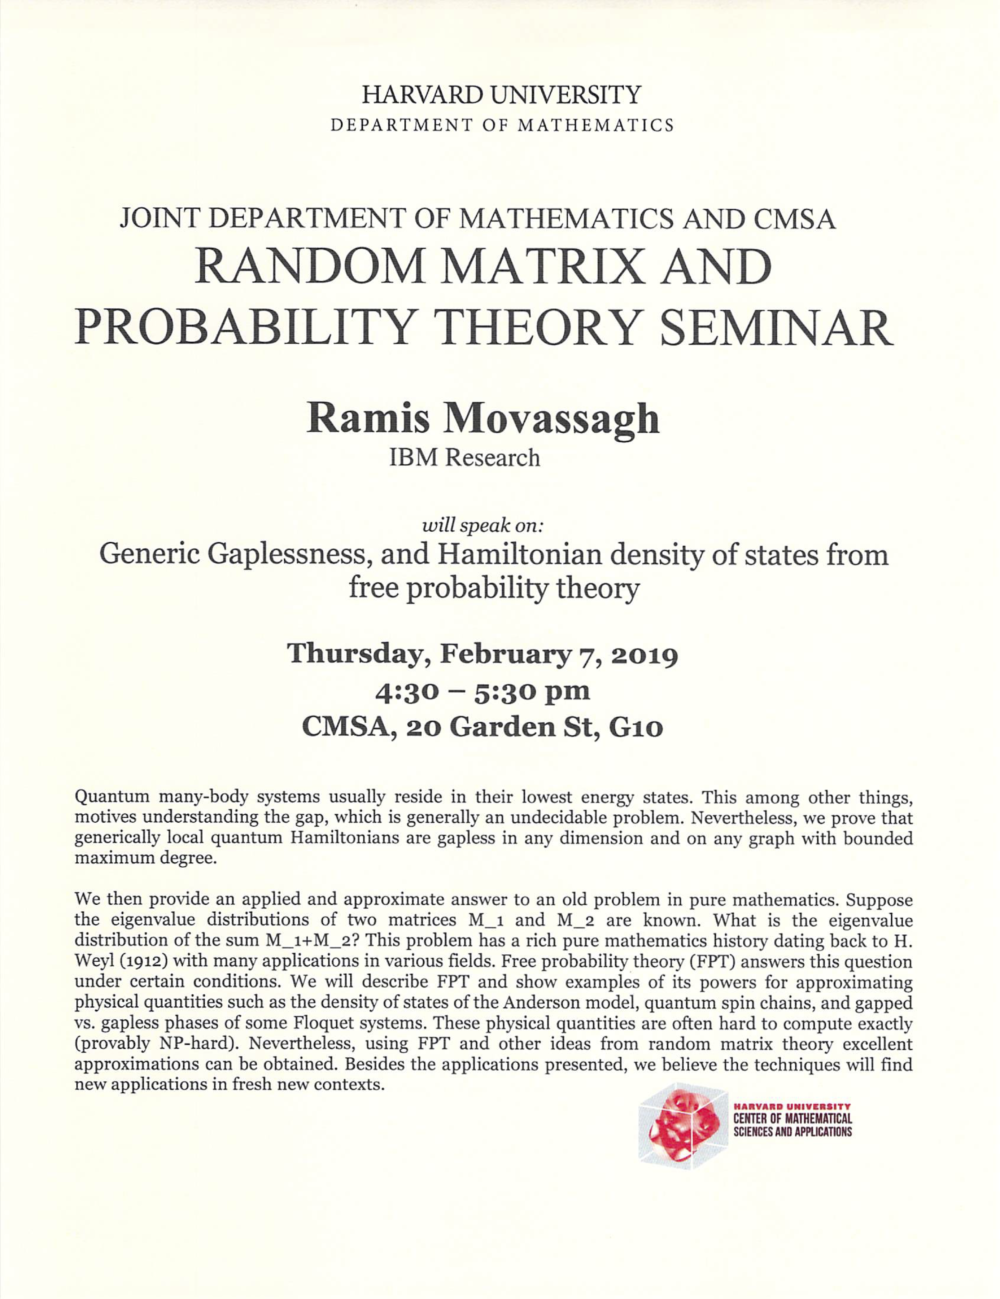 2/7/2019 Random Matrix and Probability Theory Seminar